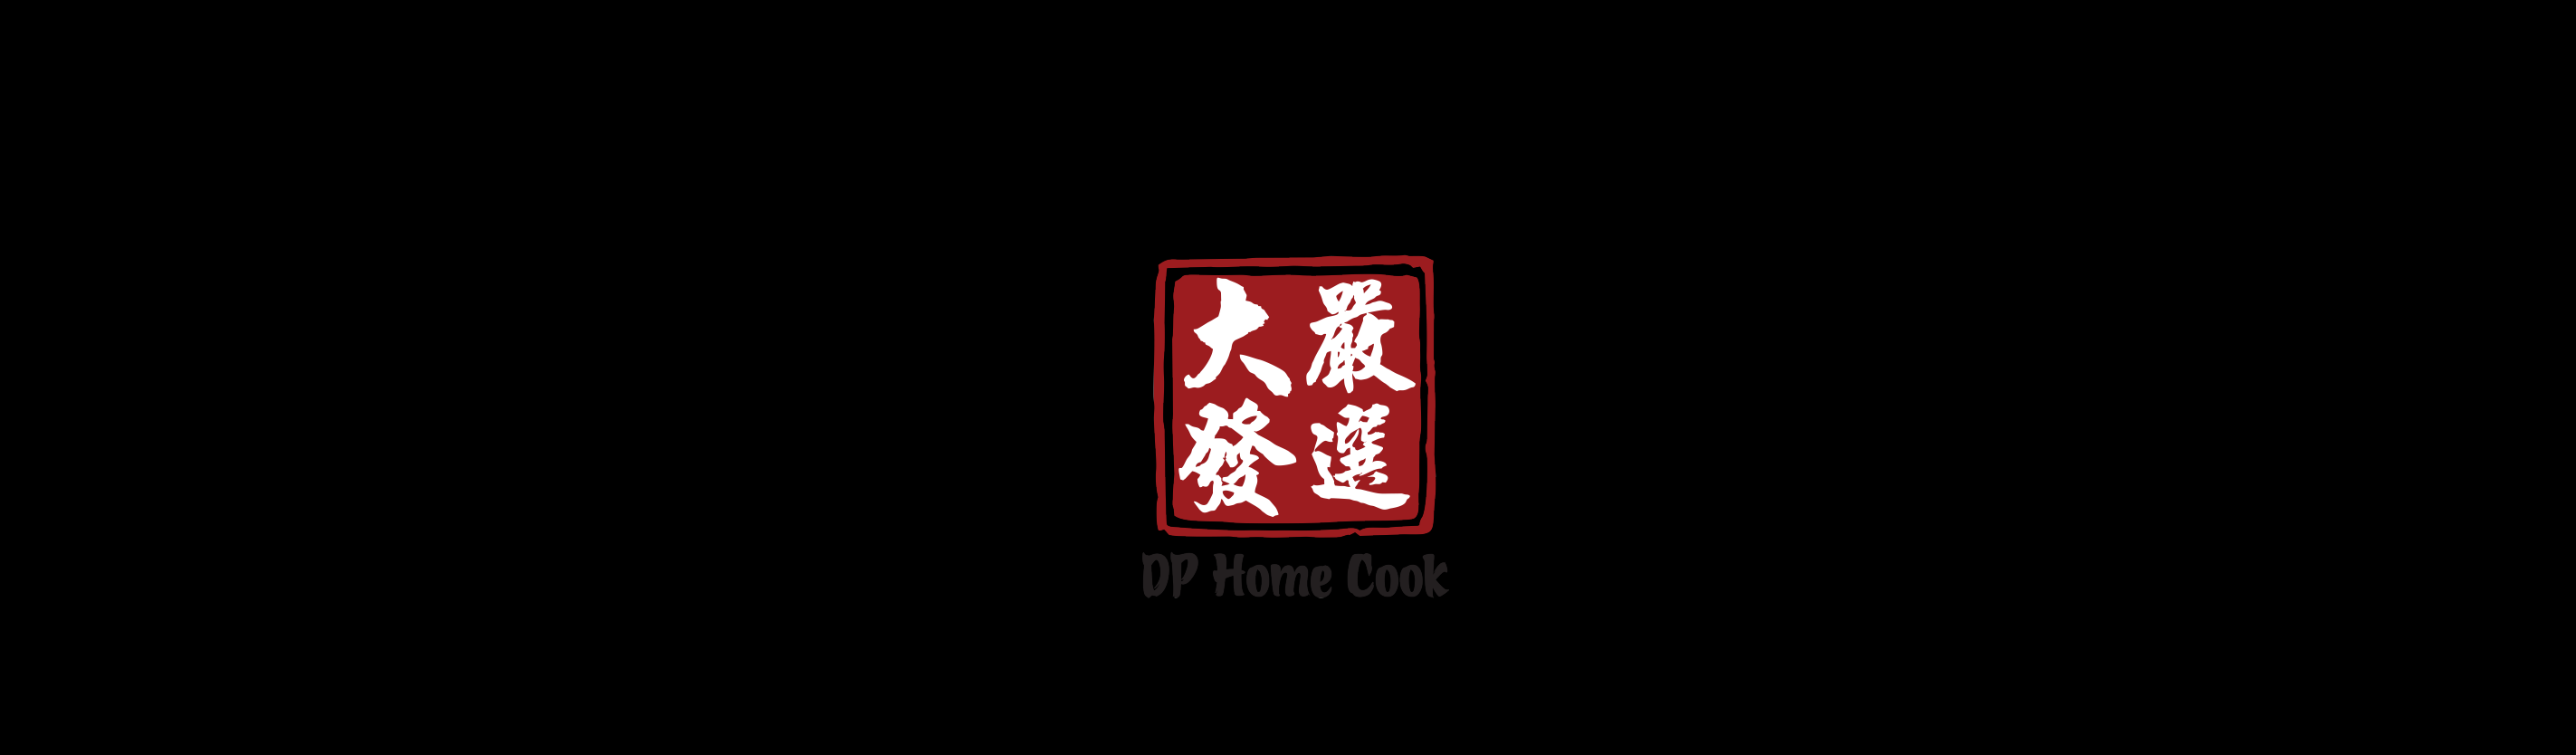 Daiphat Homecook